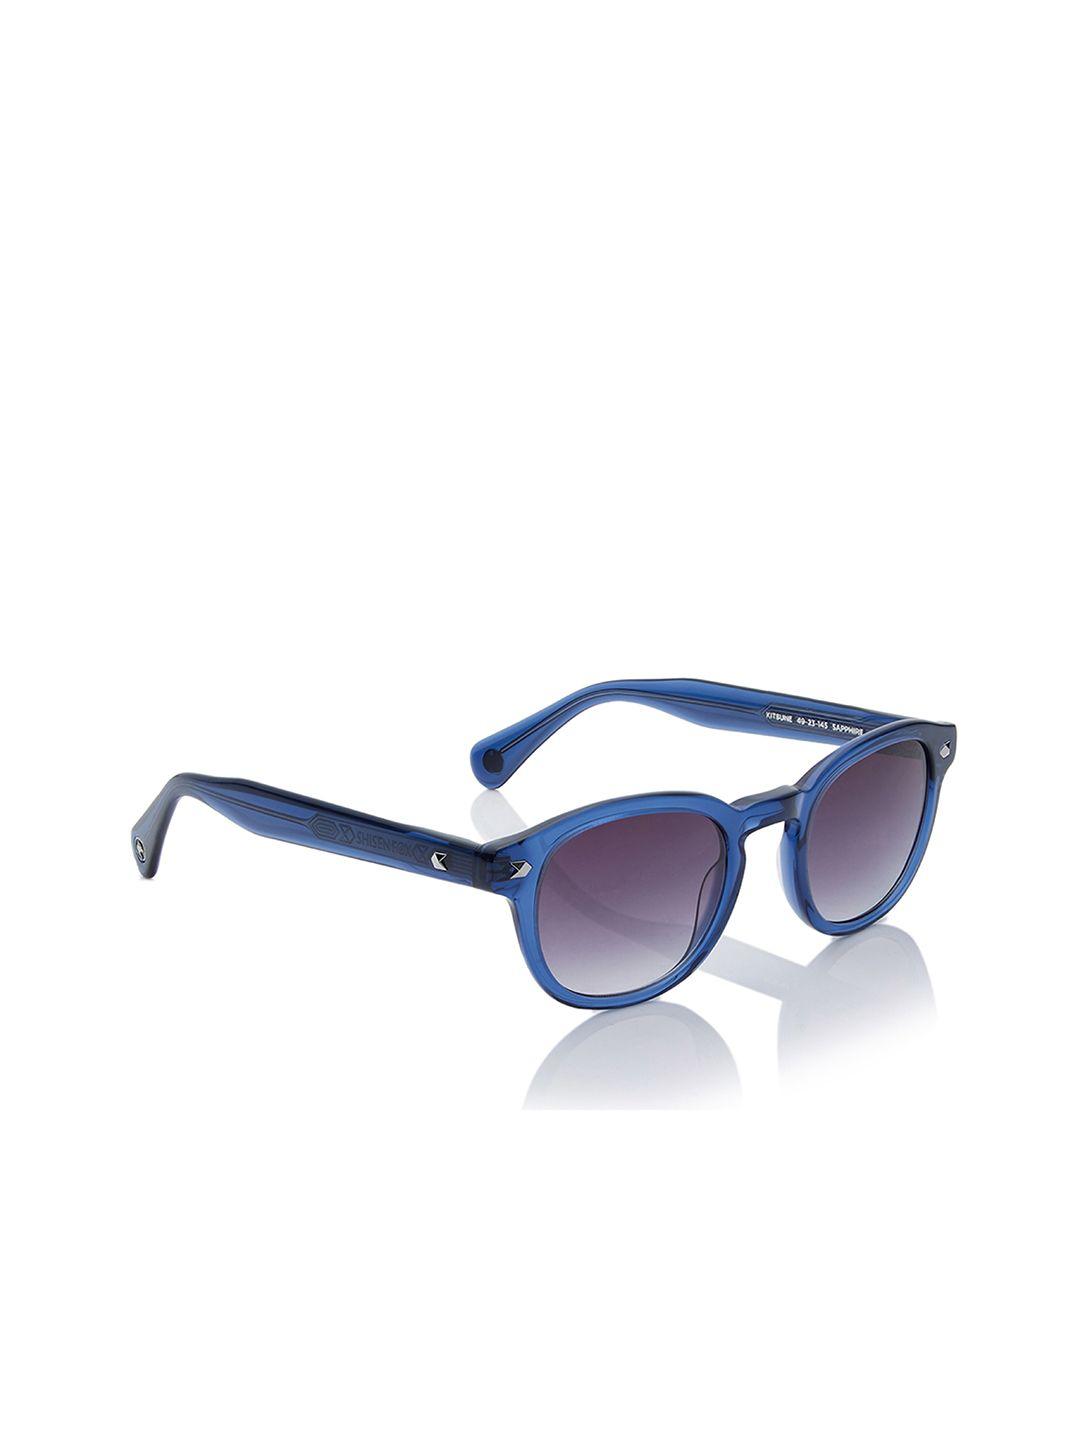 shisen fox unisex round sunglasses with uv protected lens sg032